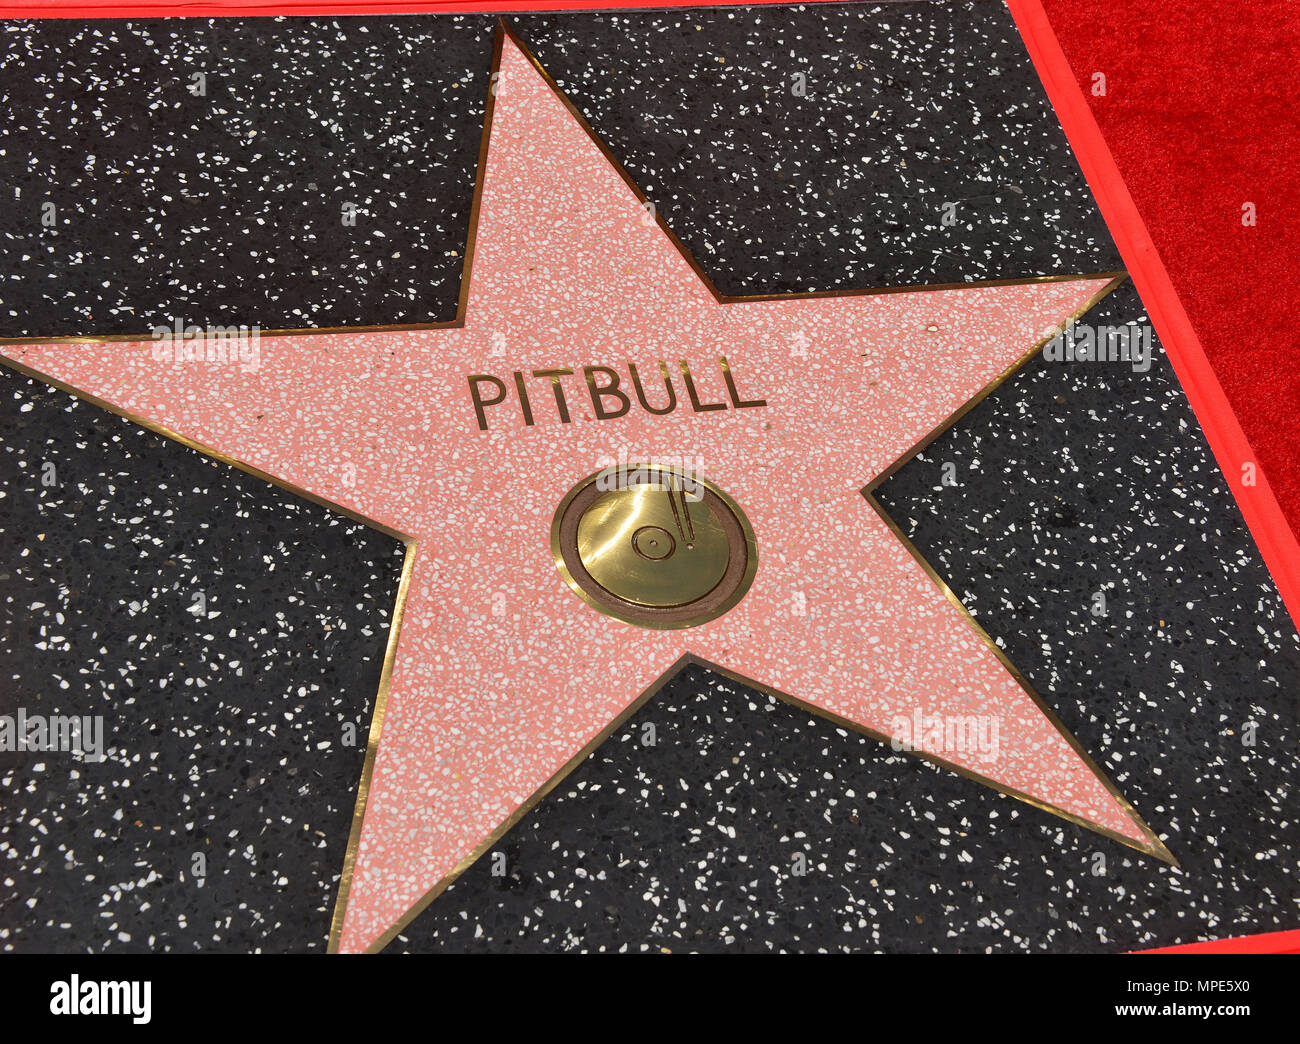 Pittbull - Stern Walk of Fame019 Fallgrube geehrt mit einem Stern auf dem  Hollywood Walk of Fame in Los Angeles. 15. JULI 2016. - pittbull Stern Walk  of Fame019 Veranstaltung in Hollywood